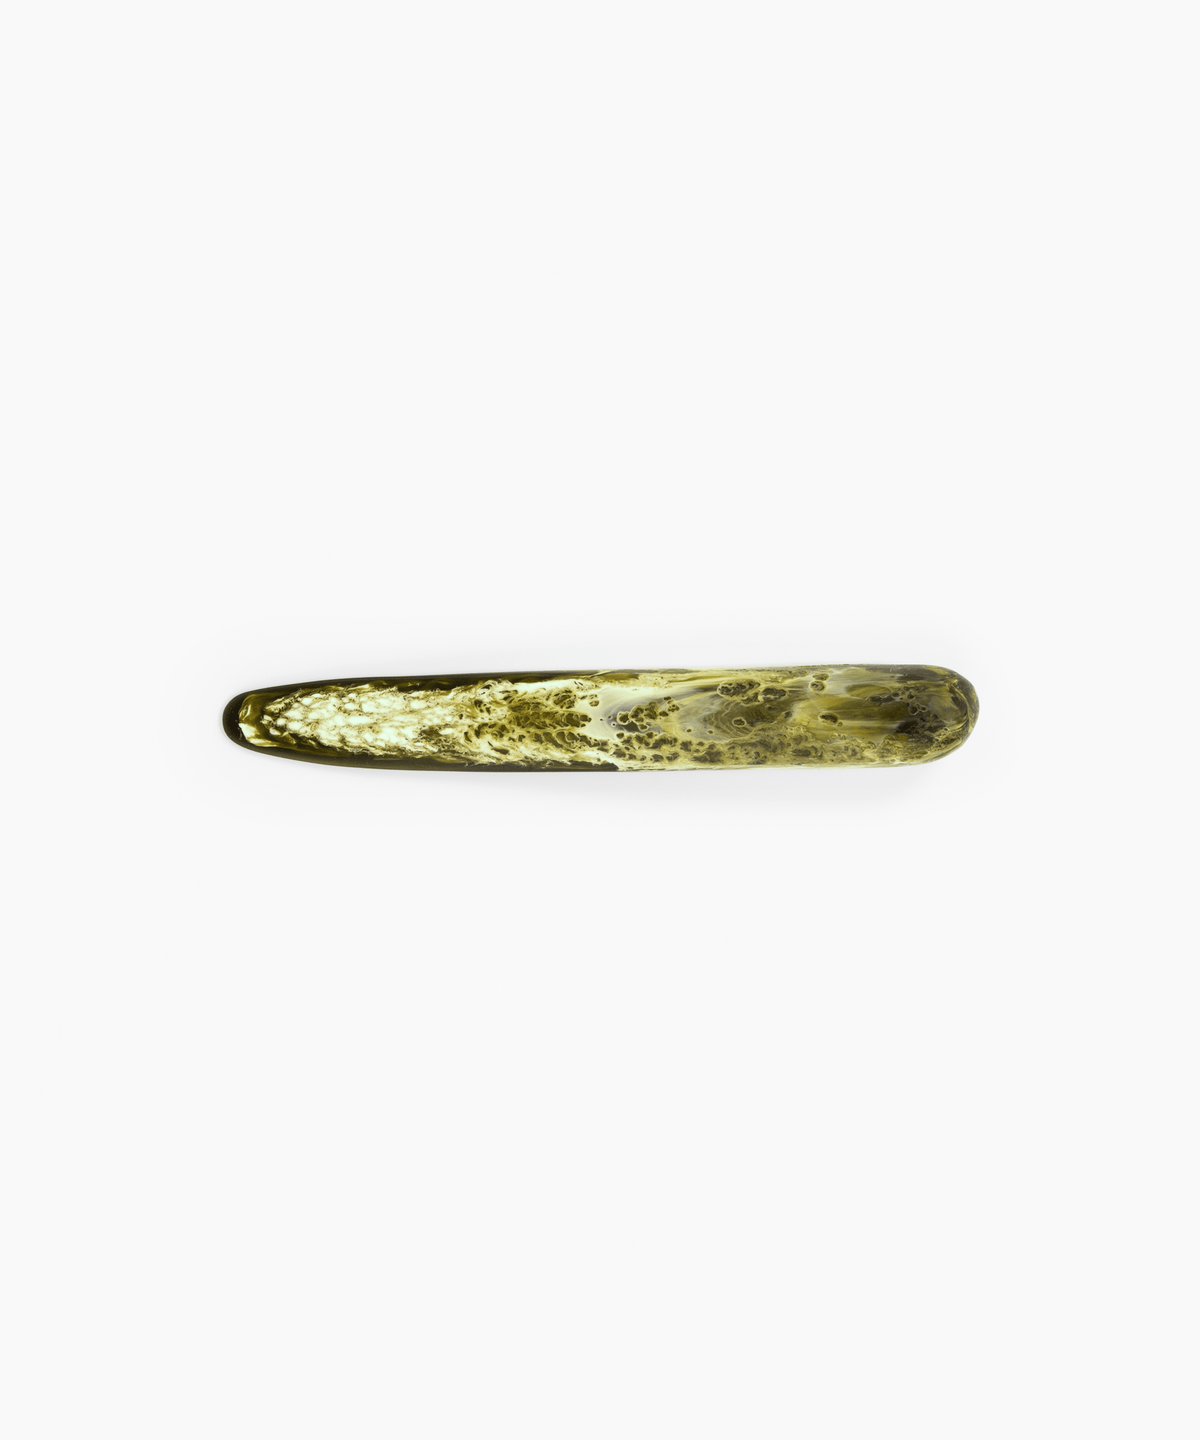 Resin Stone Cheese Knife - Malachite